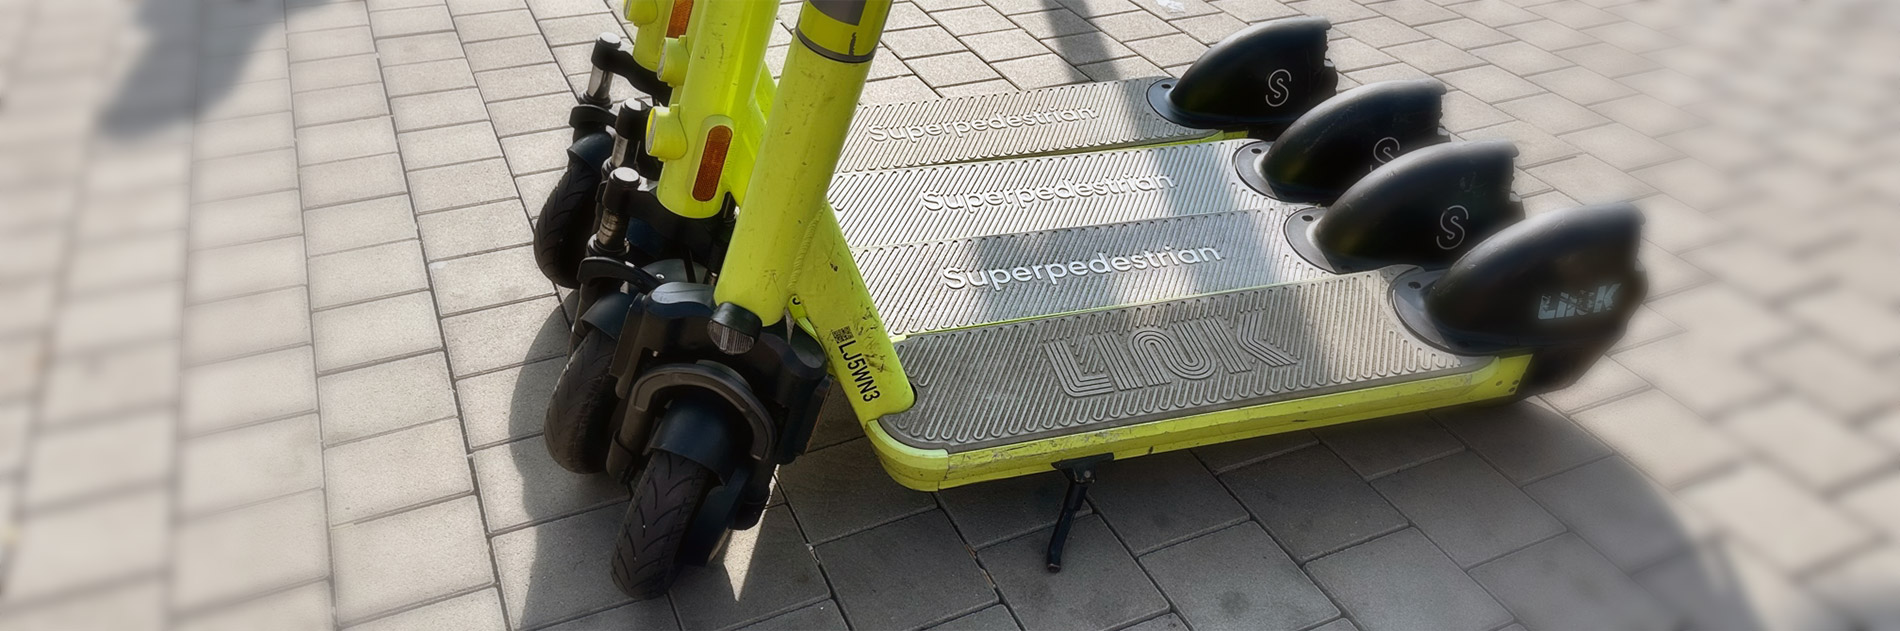 Superpedestrian E-Scooter